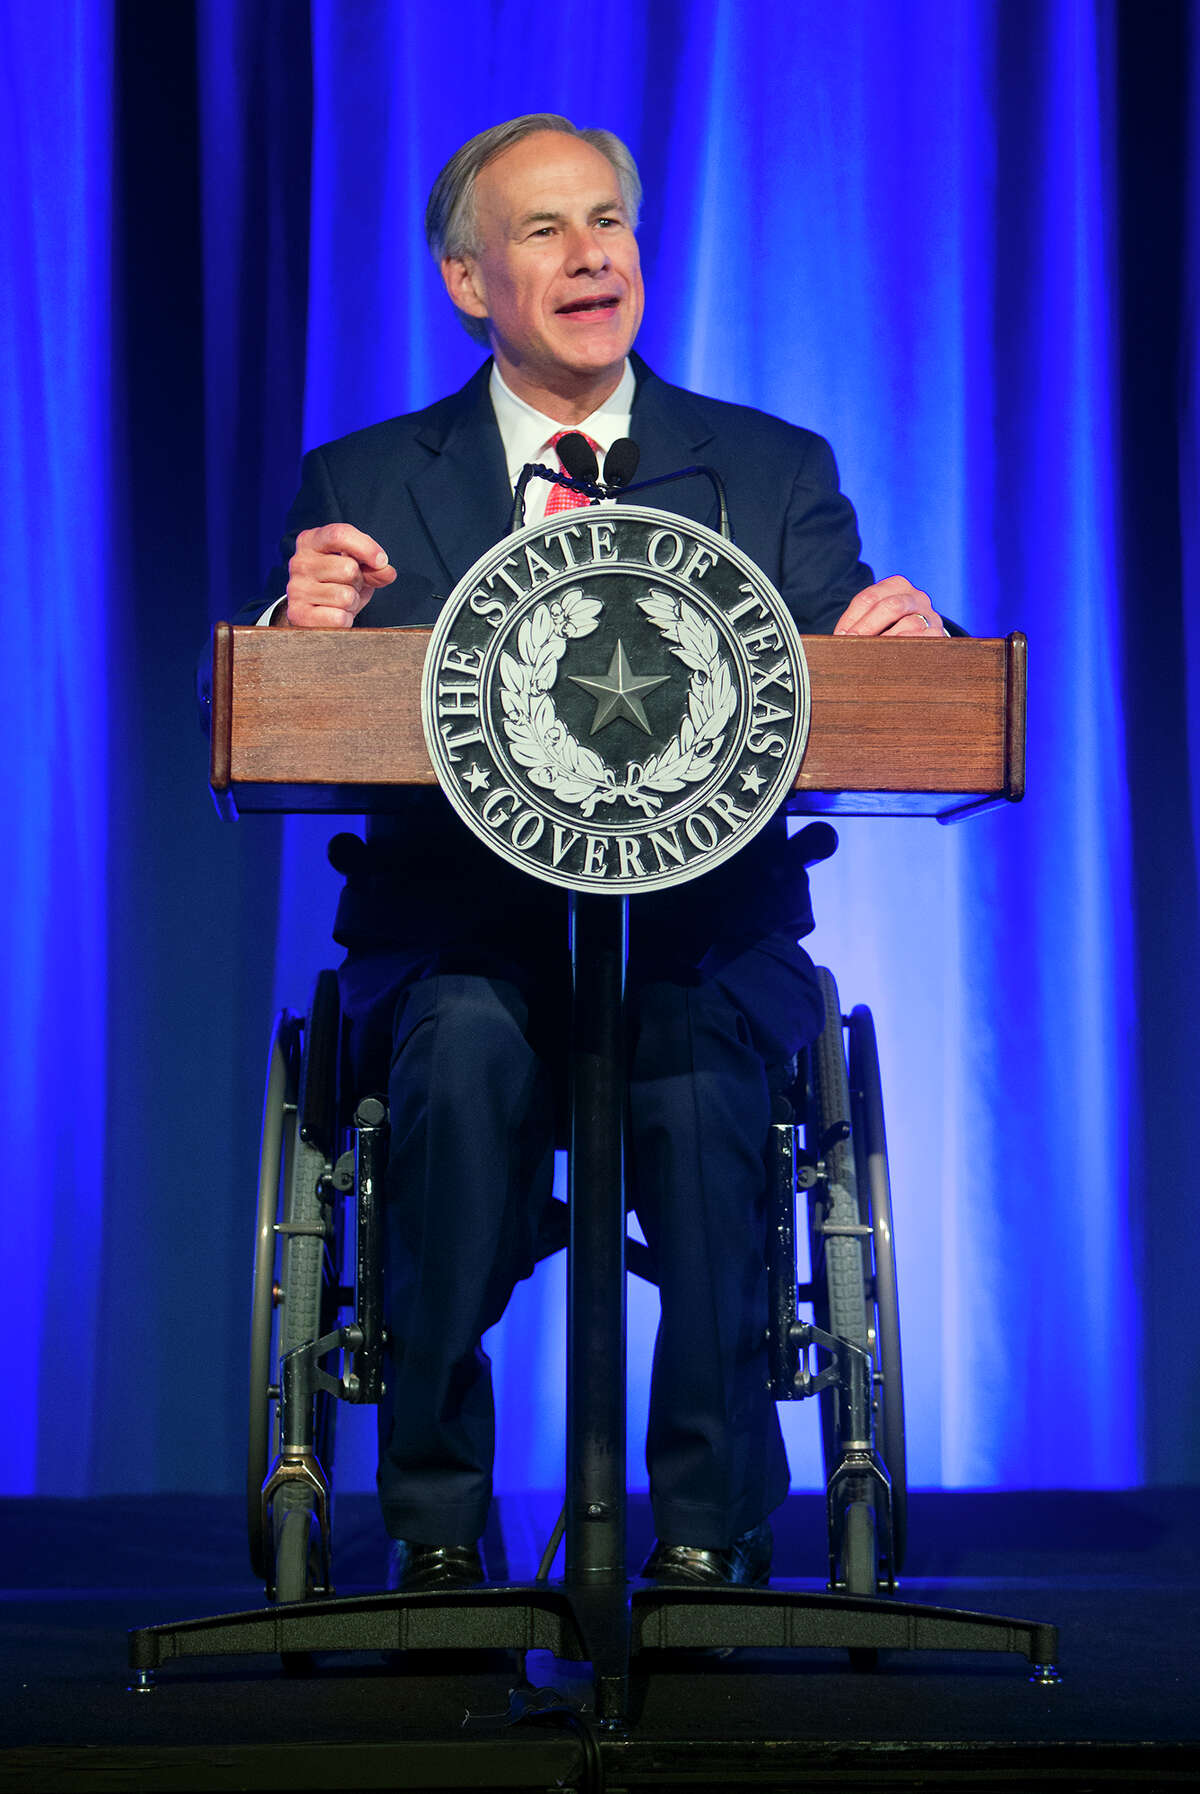 Governor Greg Abbott addresses the Houston Hispanic Chamber of Commerce at the Hilton Americas, Thursday, April 9, 2015, in Houston. (Cody Duty / Houston Chronicle)